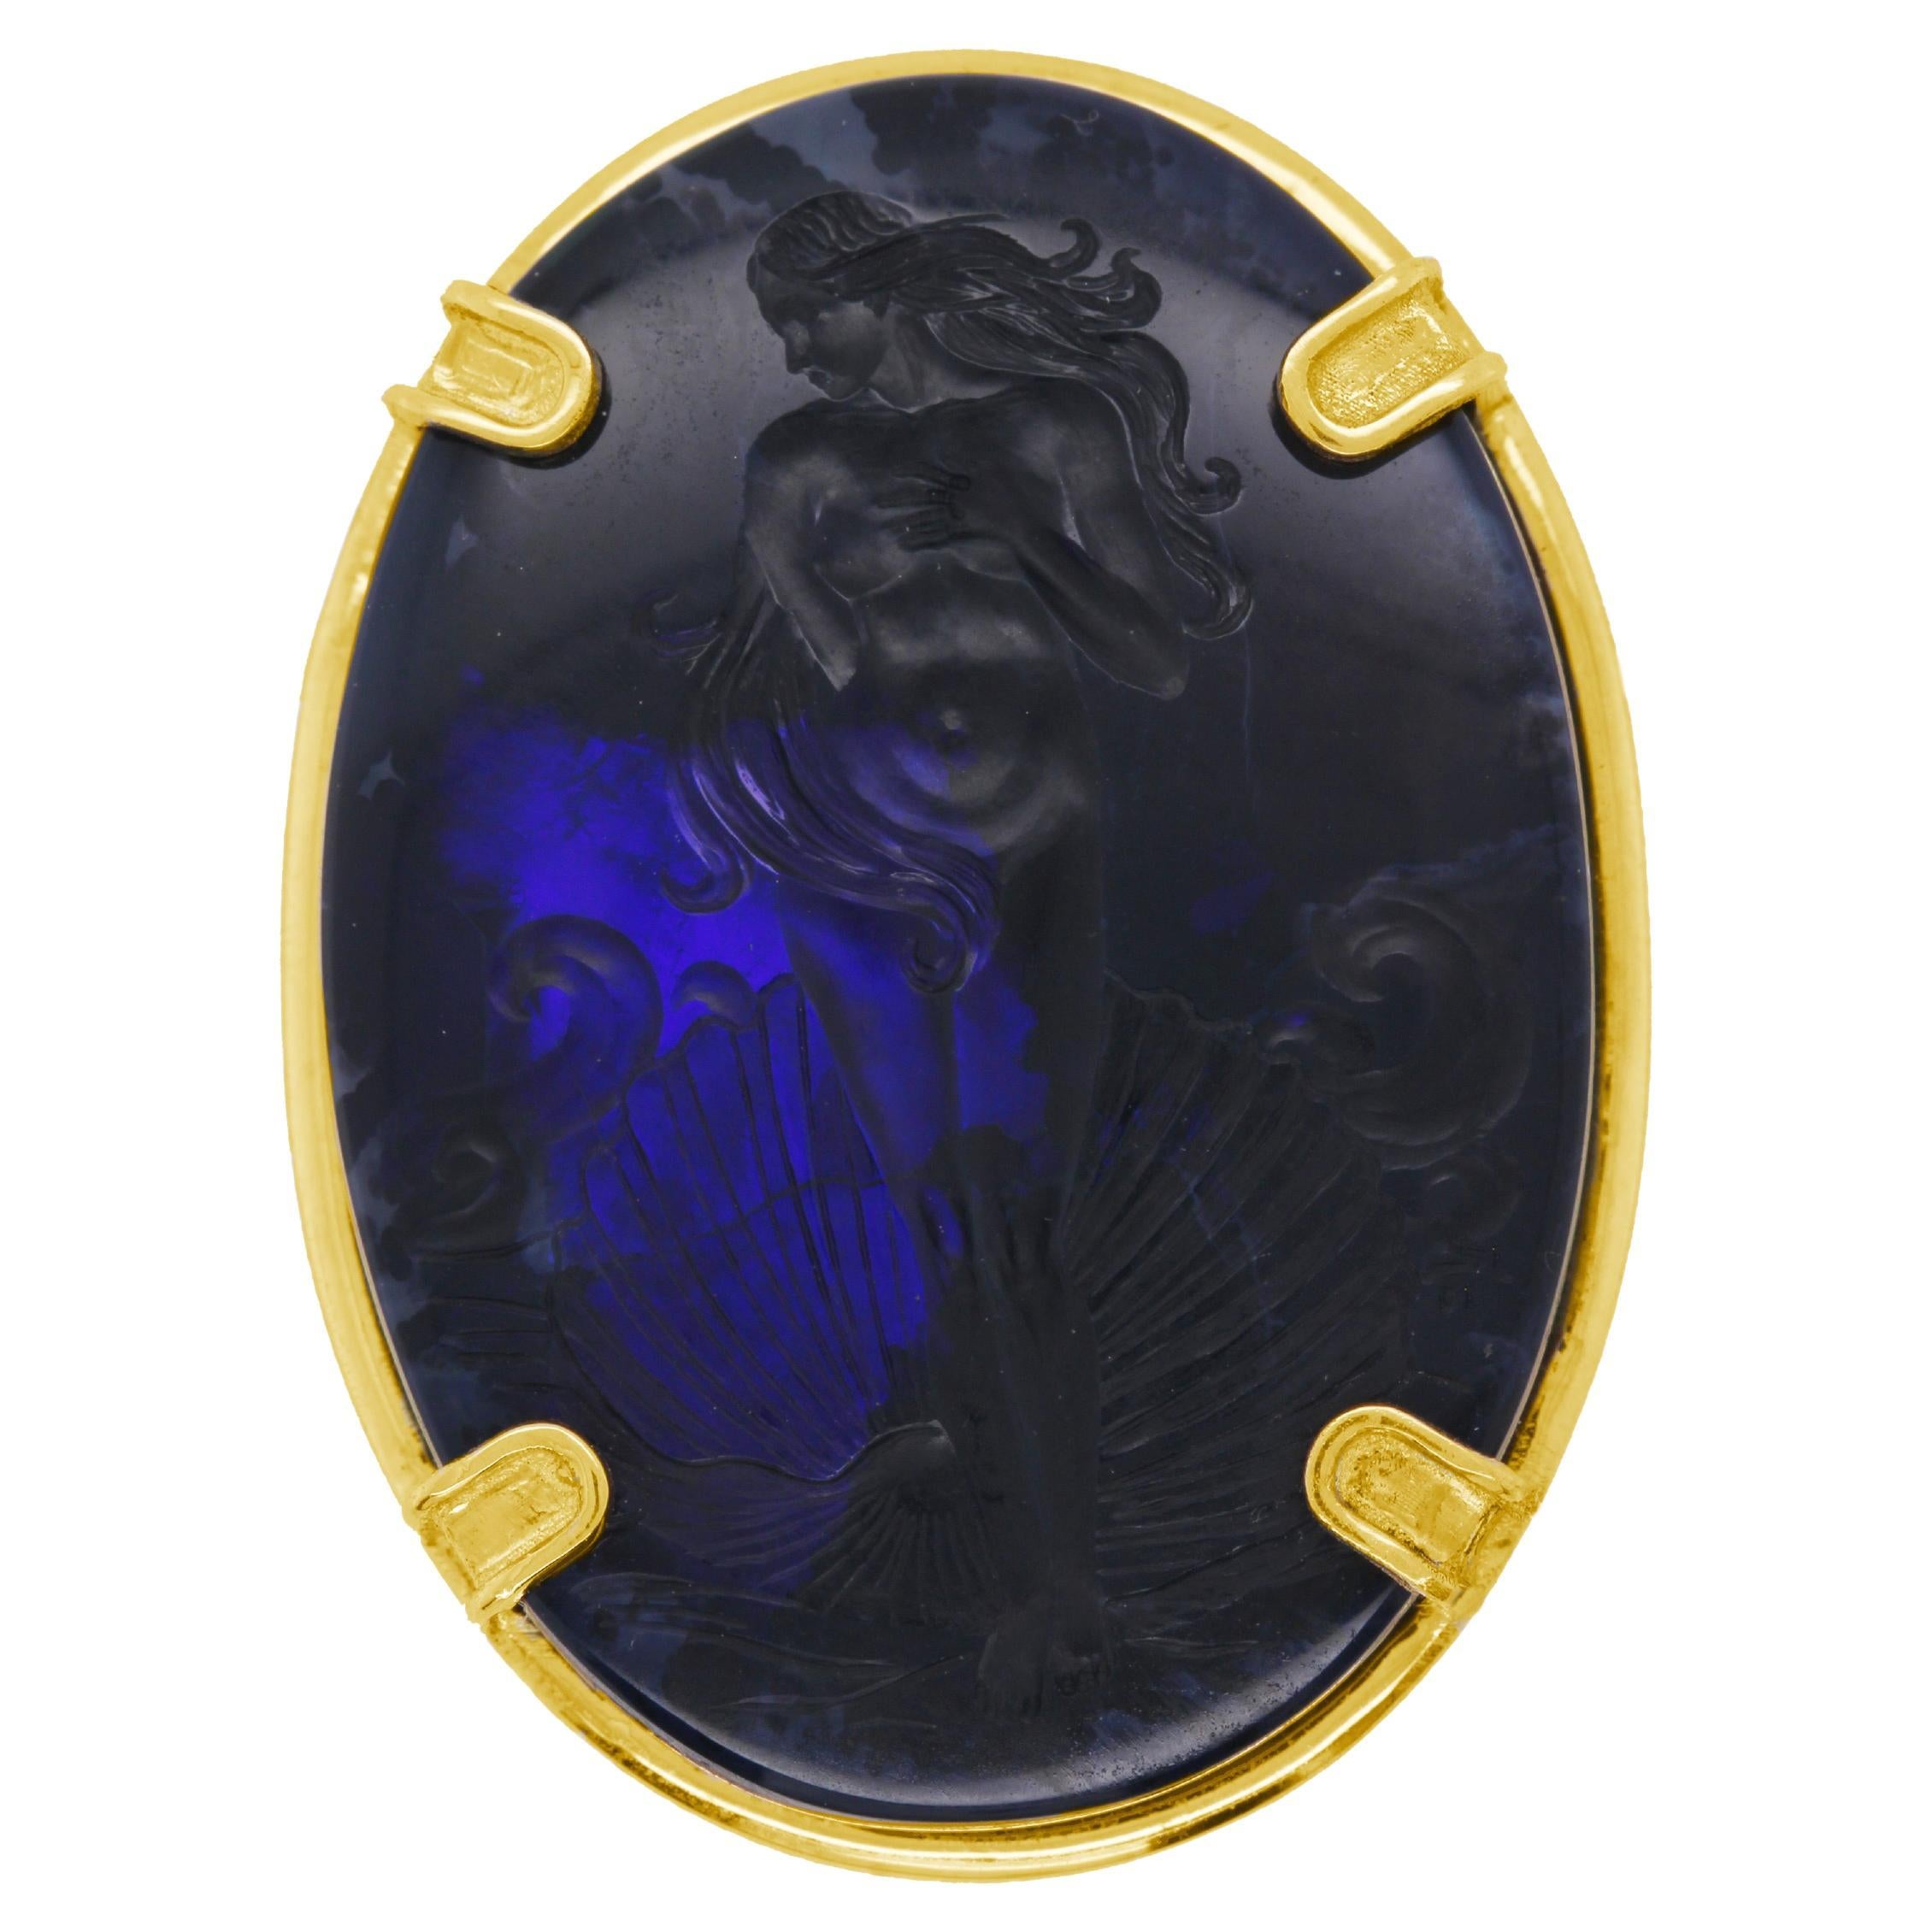 Castellani 42.06ct Black Opal Venus Hand Carved Intaglio 18kt Gold Brooch